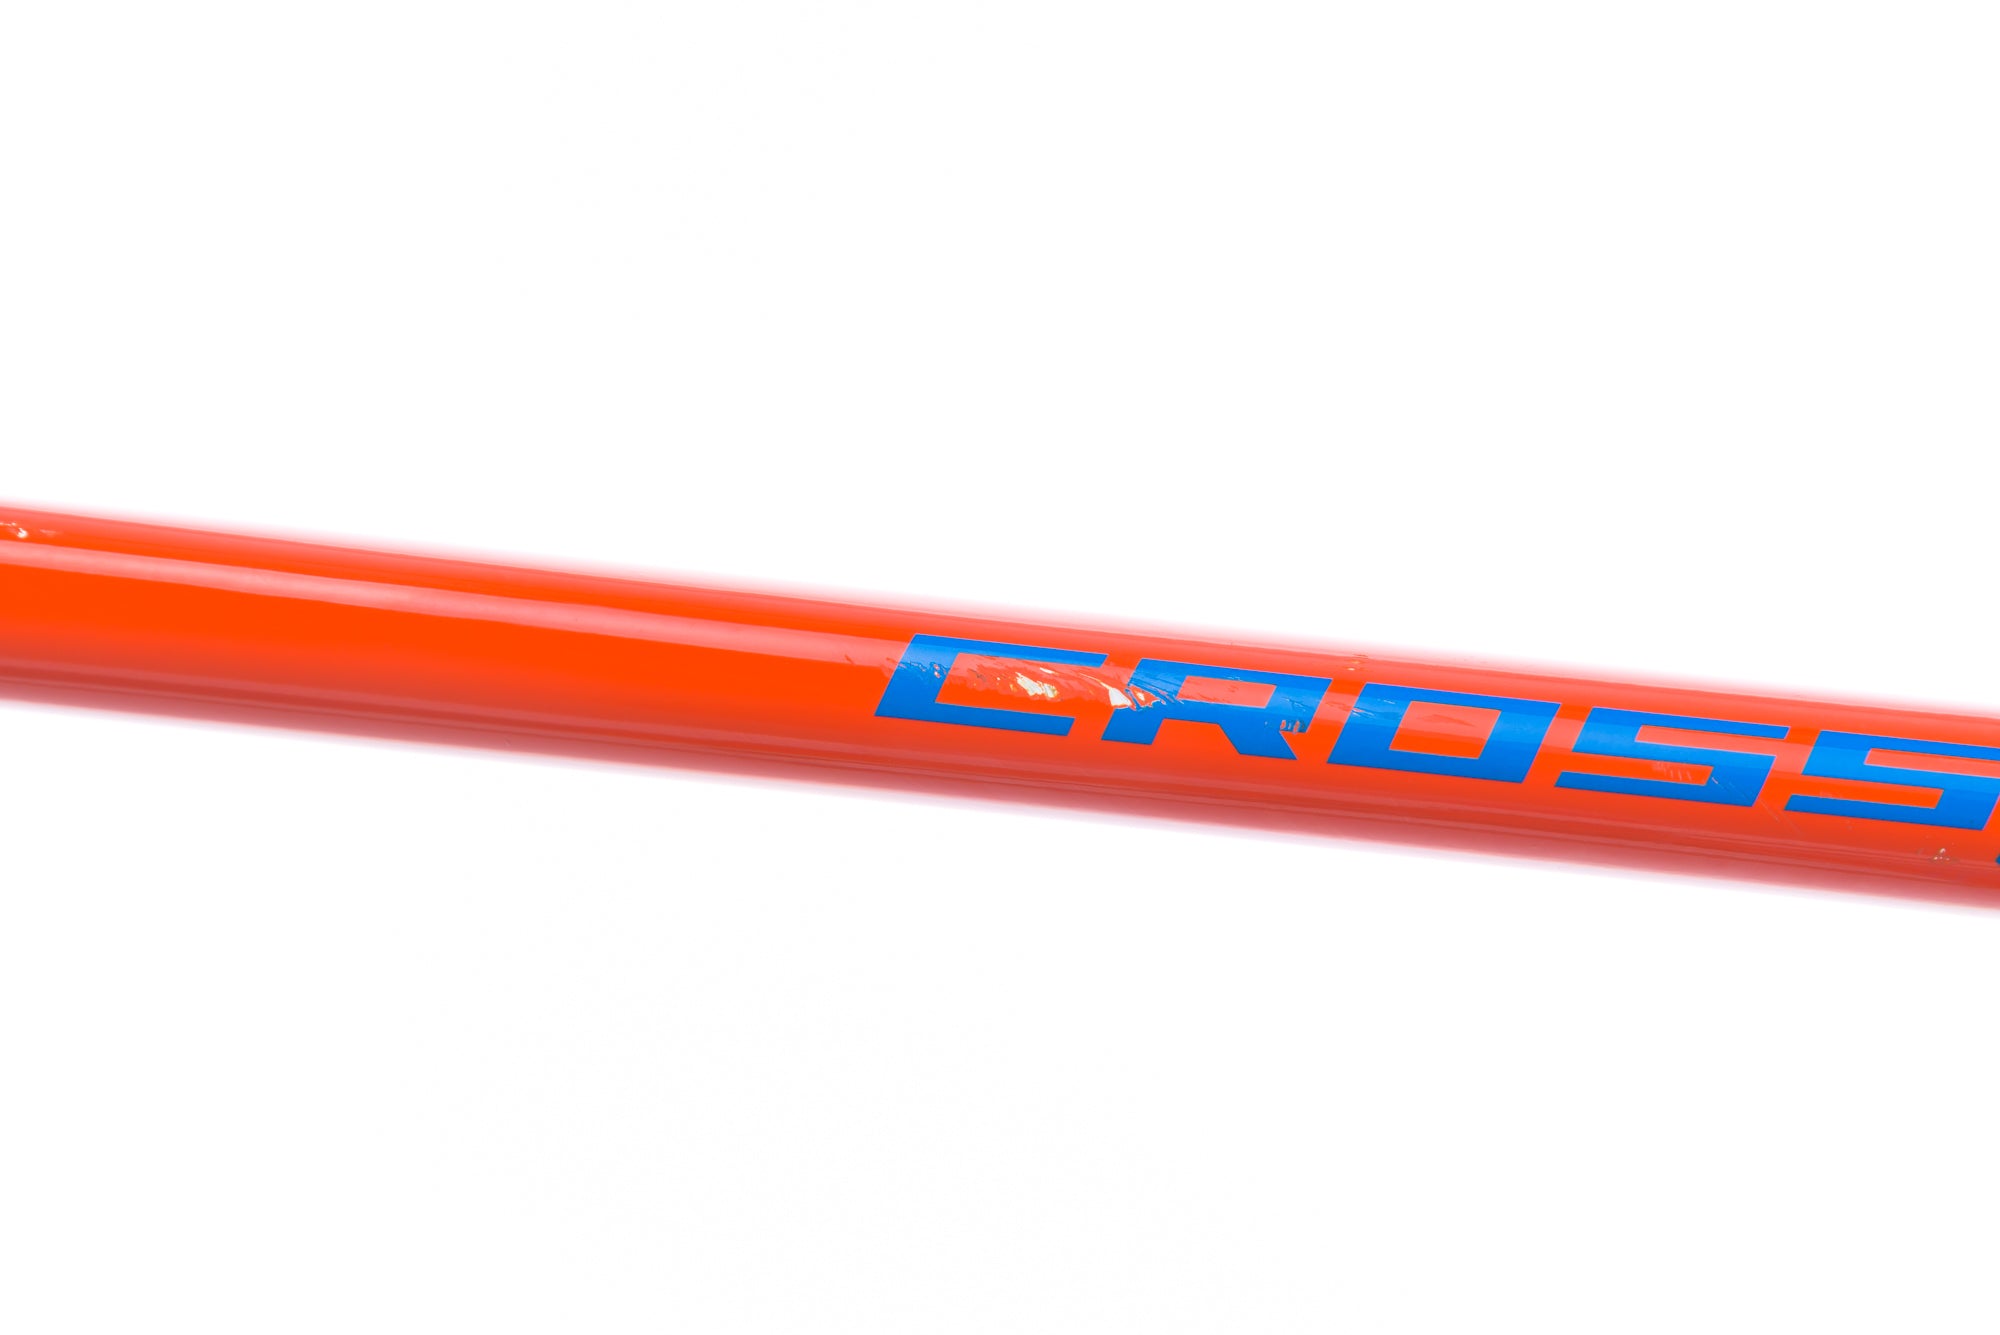 Fuji Cross 1.5 49cm Bike - 2017 crank